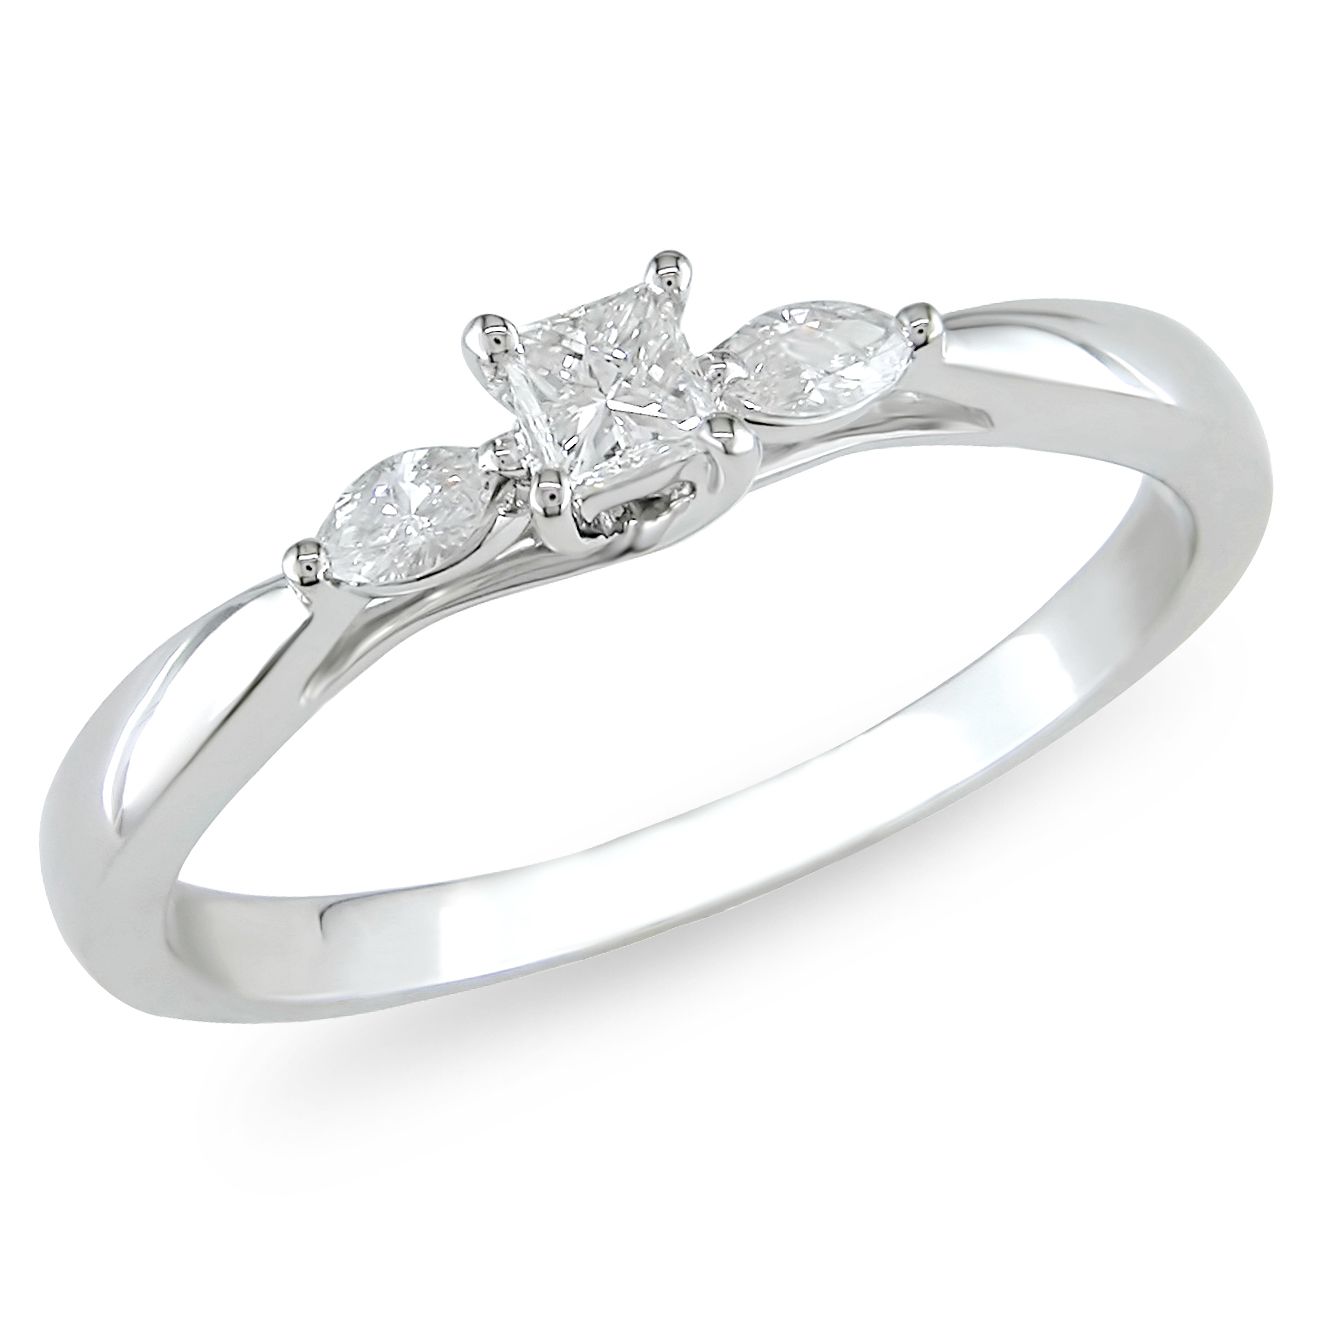 0.25 CTTW Diamond Engagement Ring in 10k White Gold